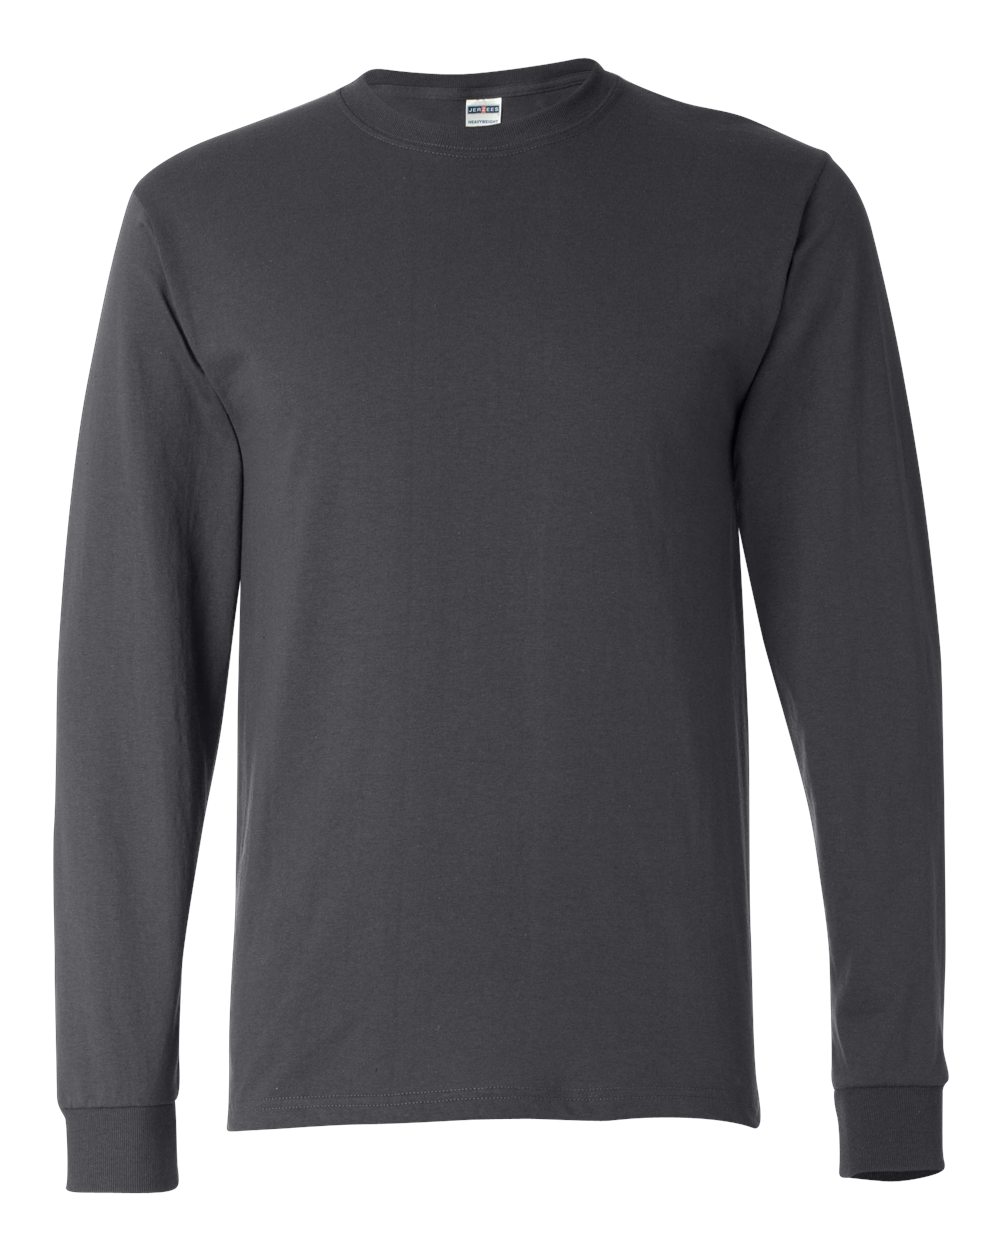 Jerzees Dri-Powered 50/50 Long Sleeve T-Shirt - SHIRT PRINTING 4U